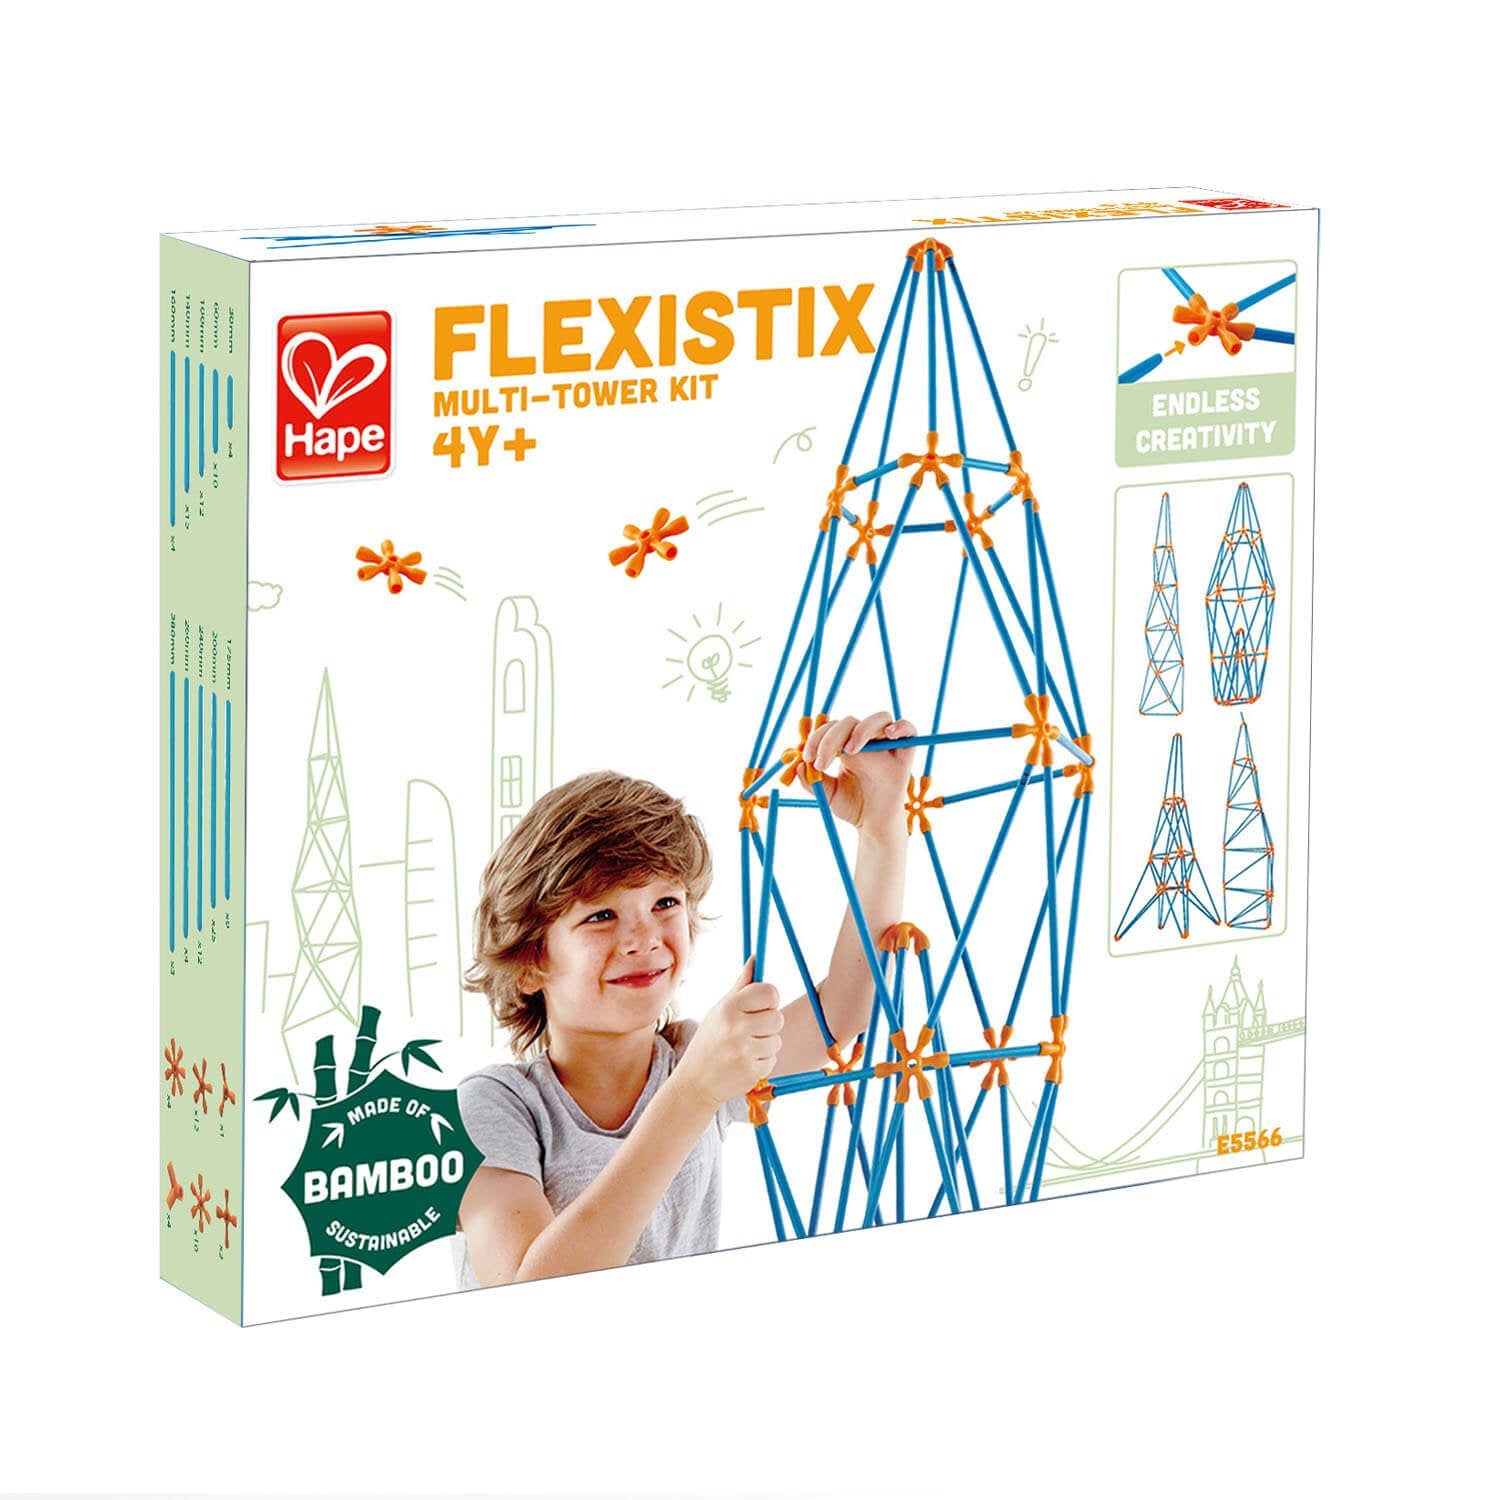 Hape Bamboo Flexistix Multi-Tower Kit Building Set